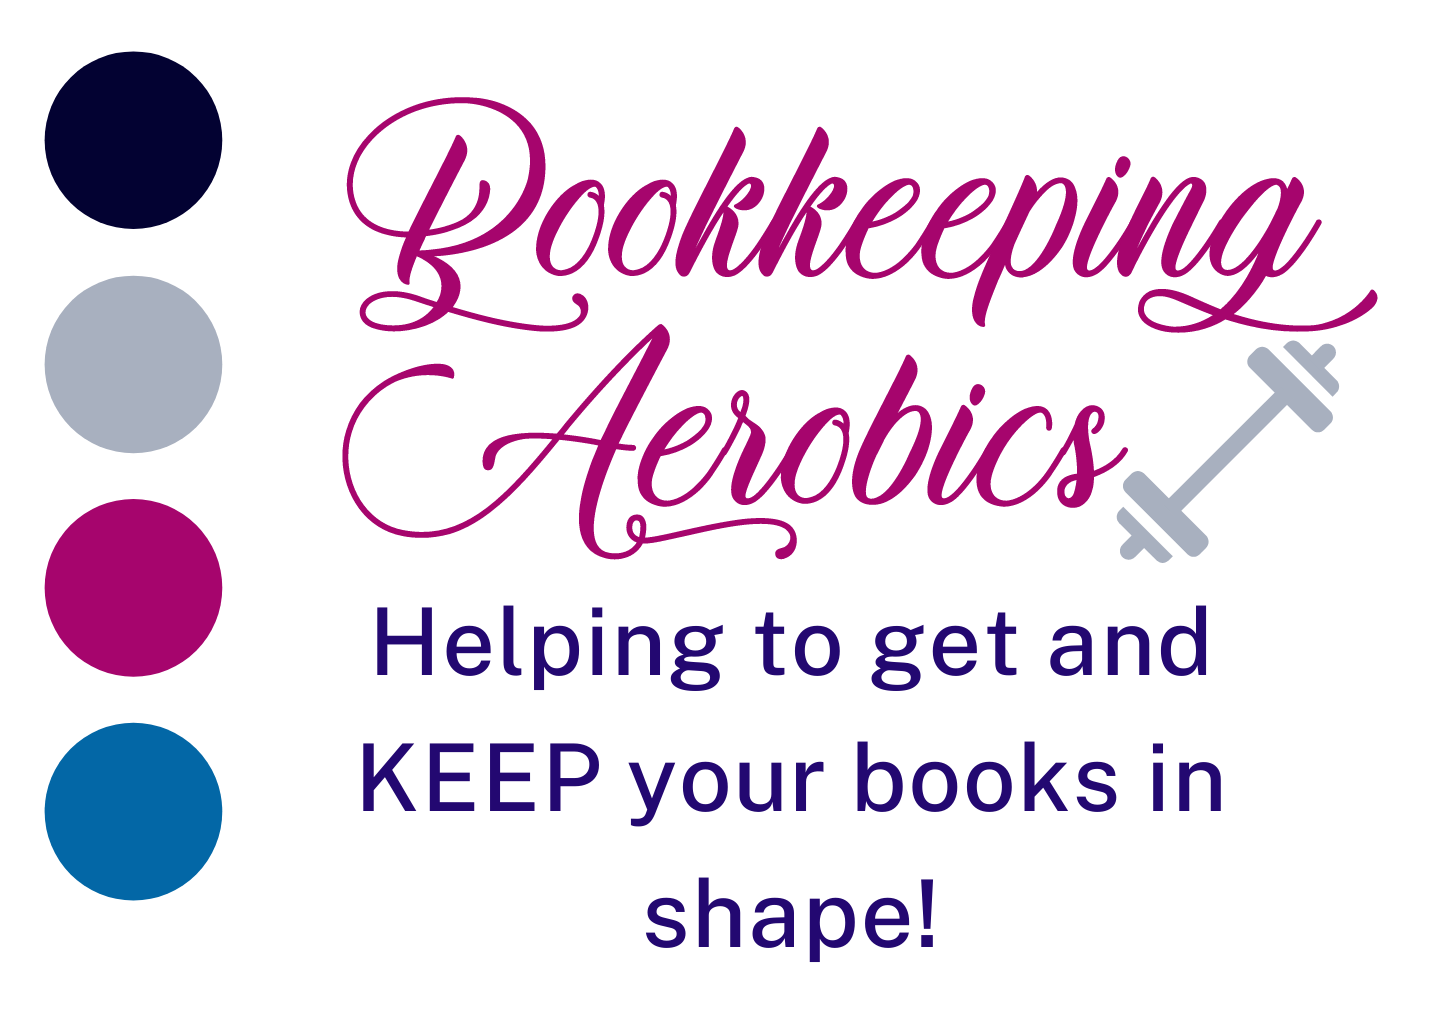 Bookkeeping Aerobics